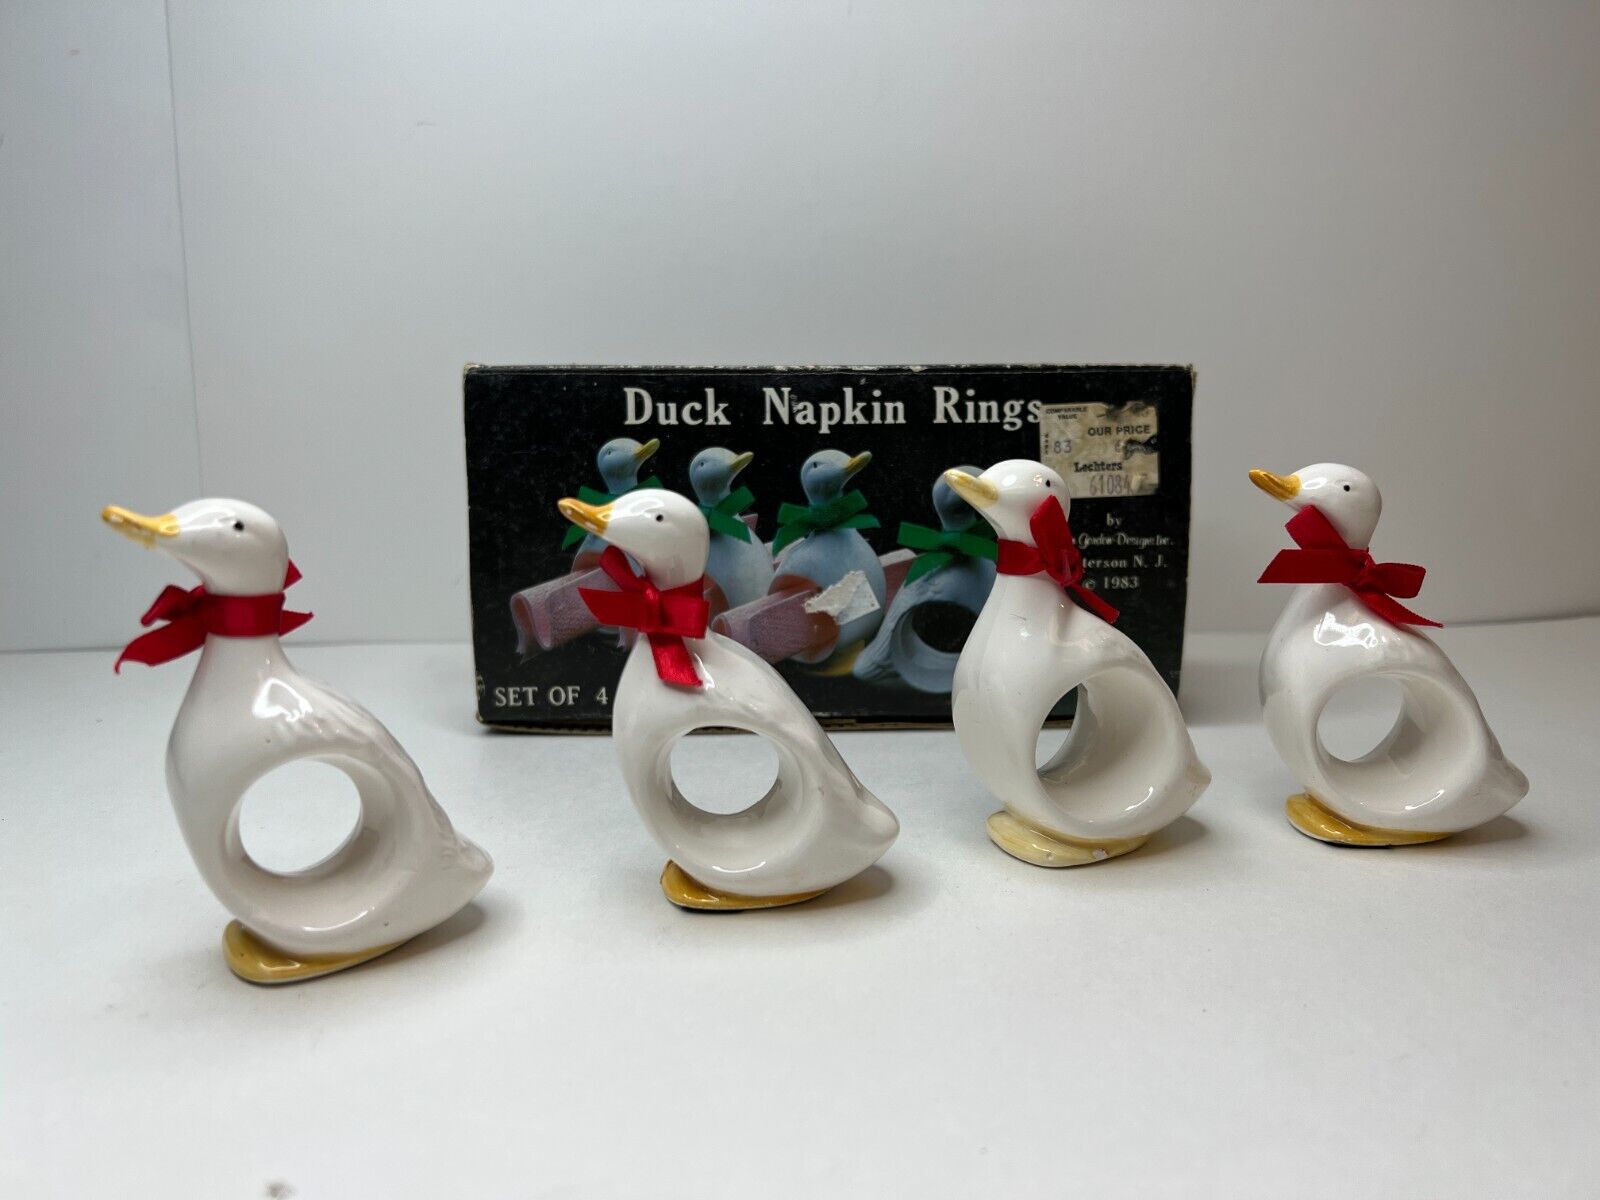 Vintage 1983 Ron Gordon Set of 4 Ceramic Duck Napkin Rings in Original Box